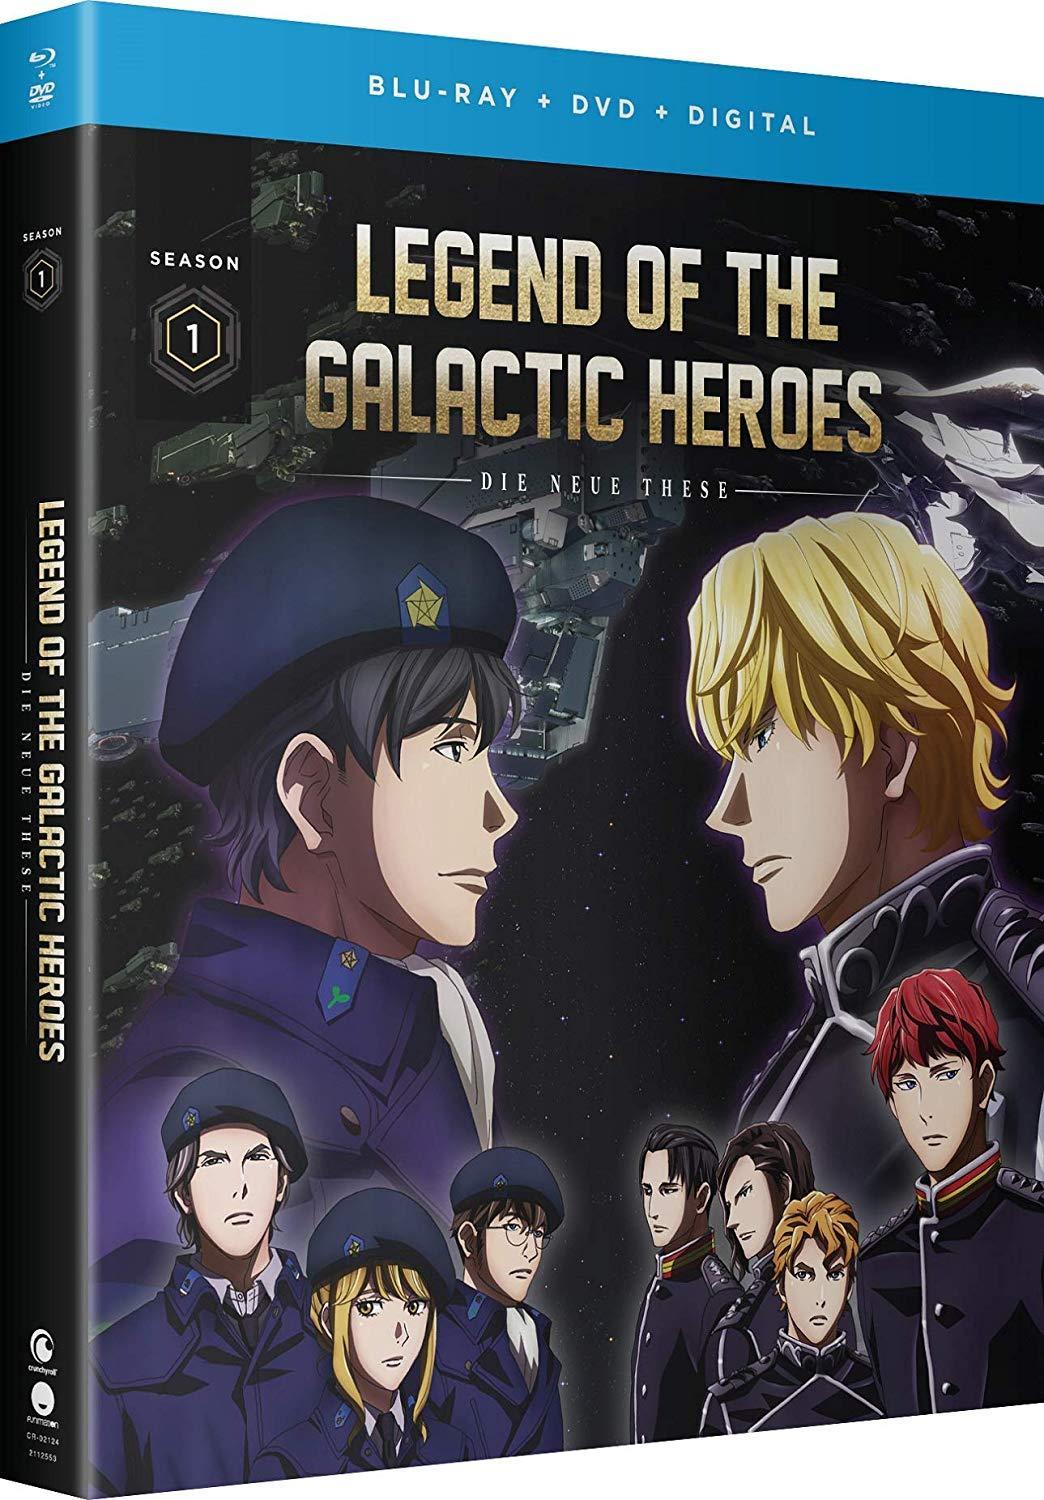 Legend of the Galactic Heroes: Die Neue These - Season 1 - Blu-Ray + DVD image count 1